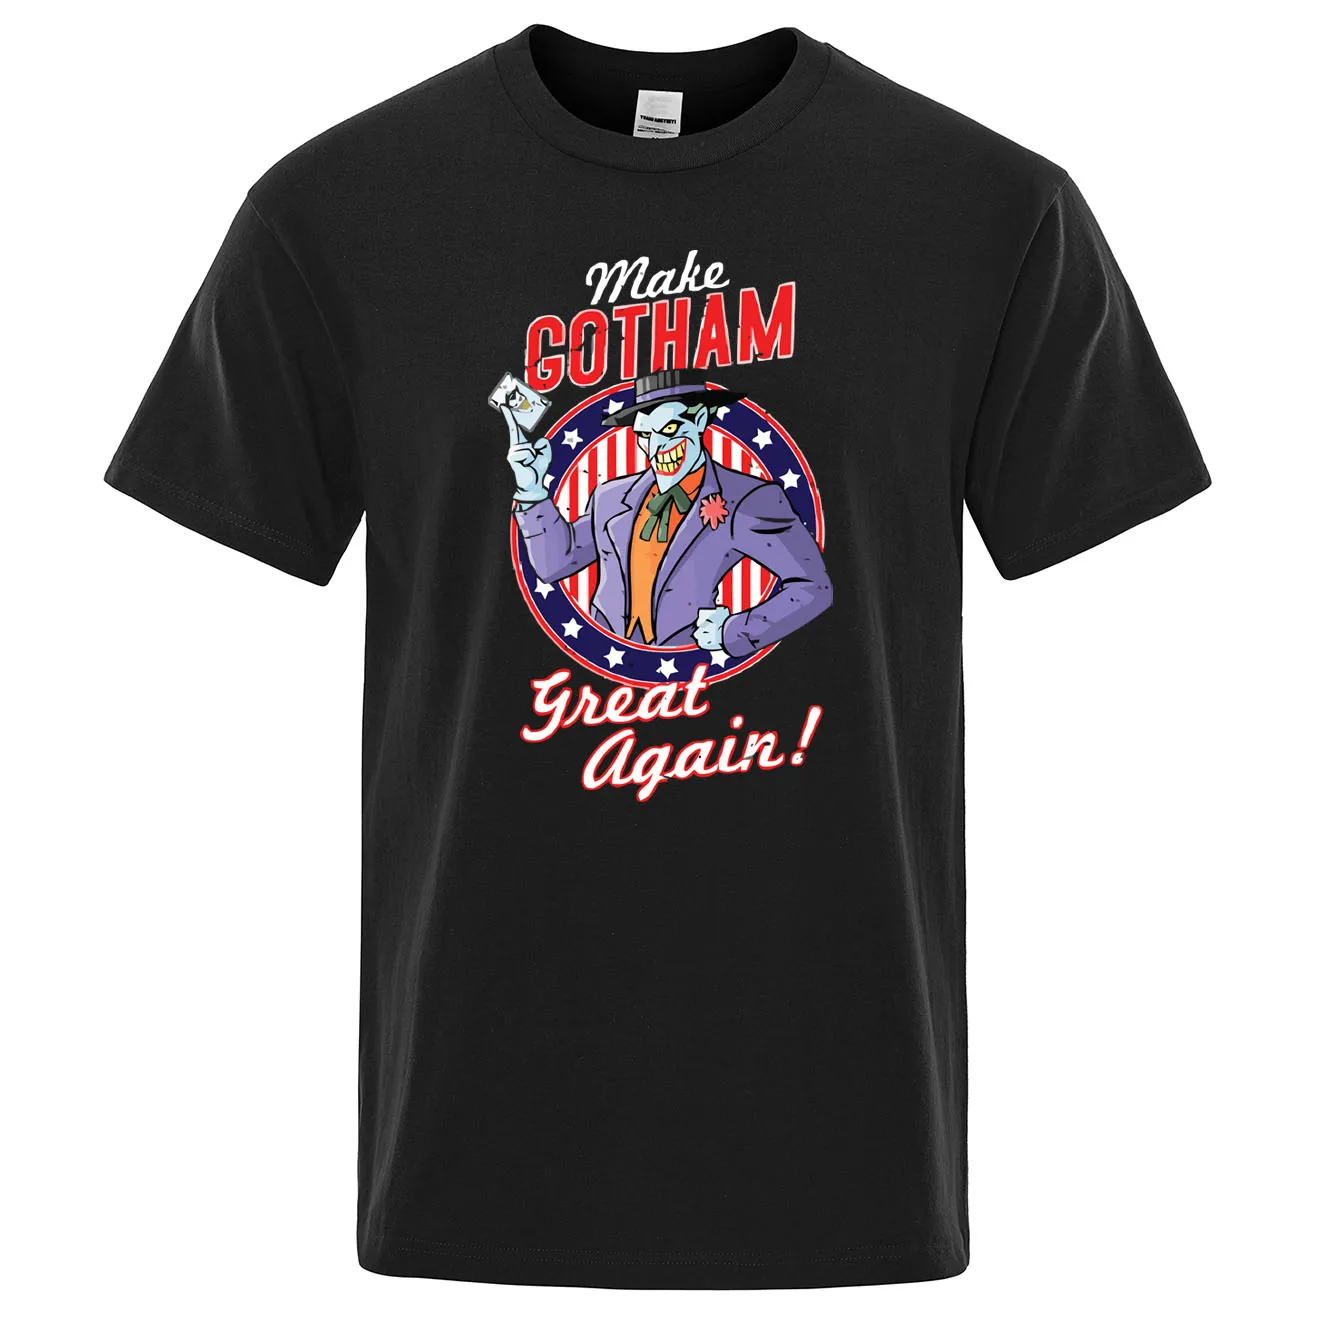 

2019 Summer Cotton T Shirt Hot Sale New Men's TShirt Make Gotham Great Again Letter Print T-Shirt Men Clothing Hip Hop Tops Tees